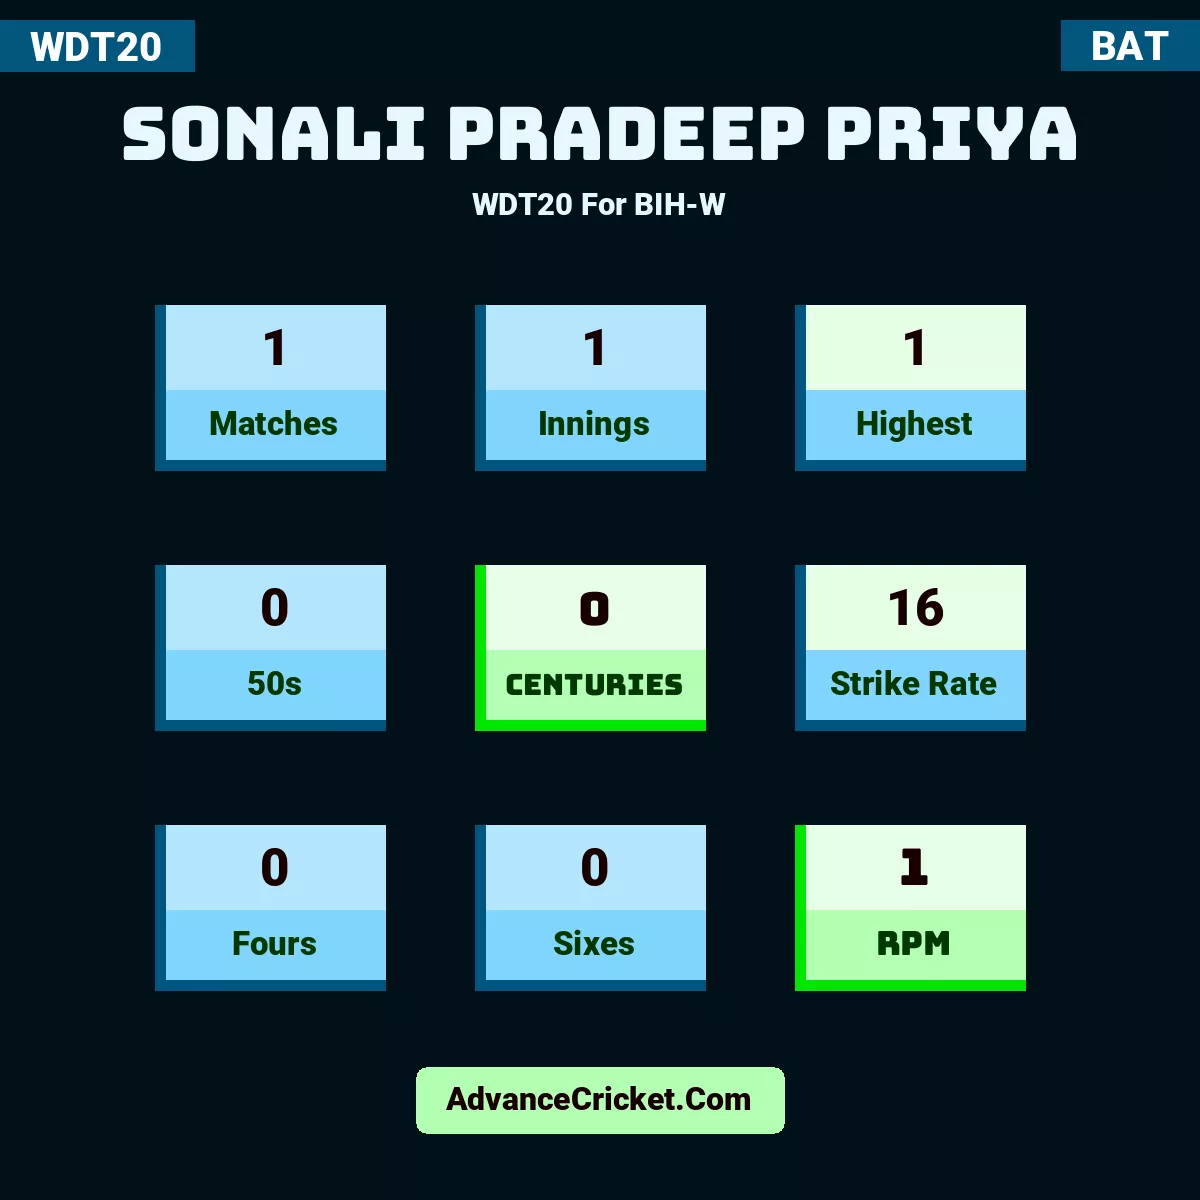 Sonali Pradeep Priya WDT20  For BIH-W, Sonali Pradeep Priya played 1 matches, scored 1 runs as highest, 0 half-centuries, and 0 centuries, with a strike rate of 16. S.Pradeep.Priya hit 0 fours and 0 sixes, with an RPM of 1.